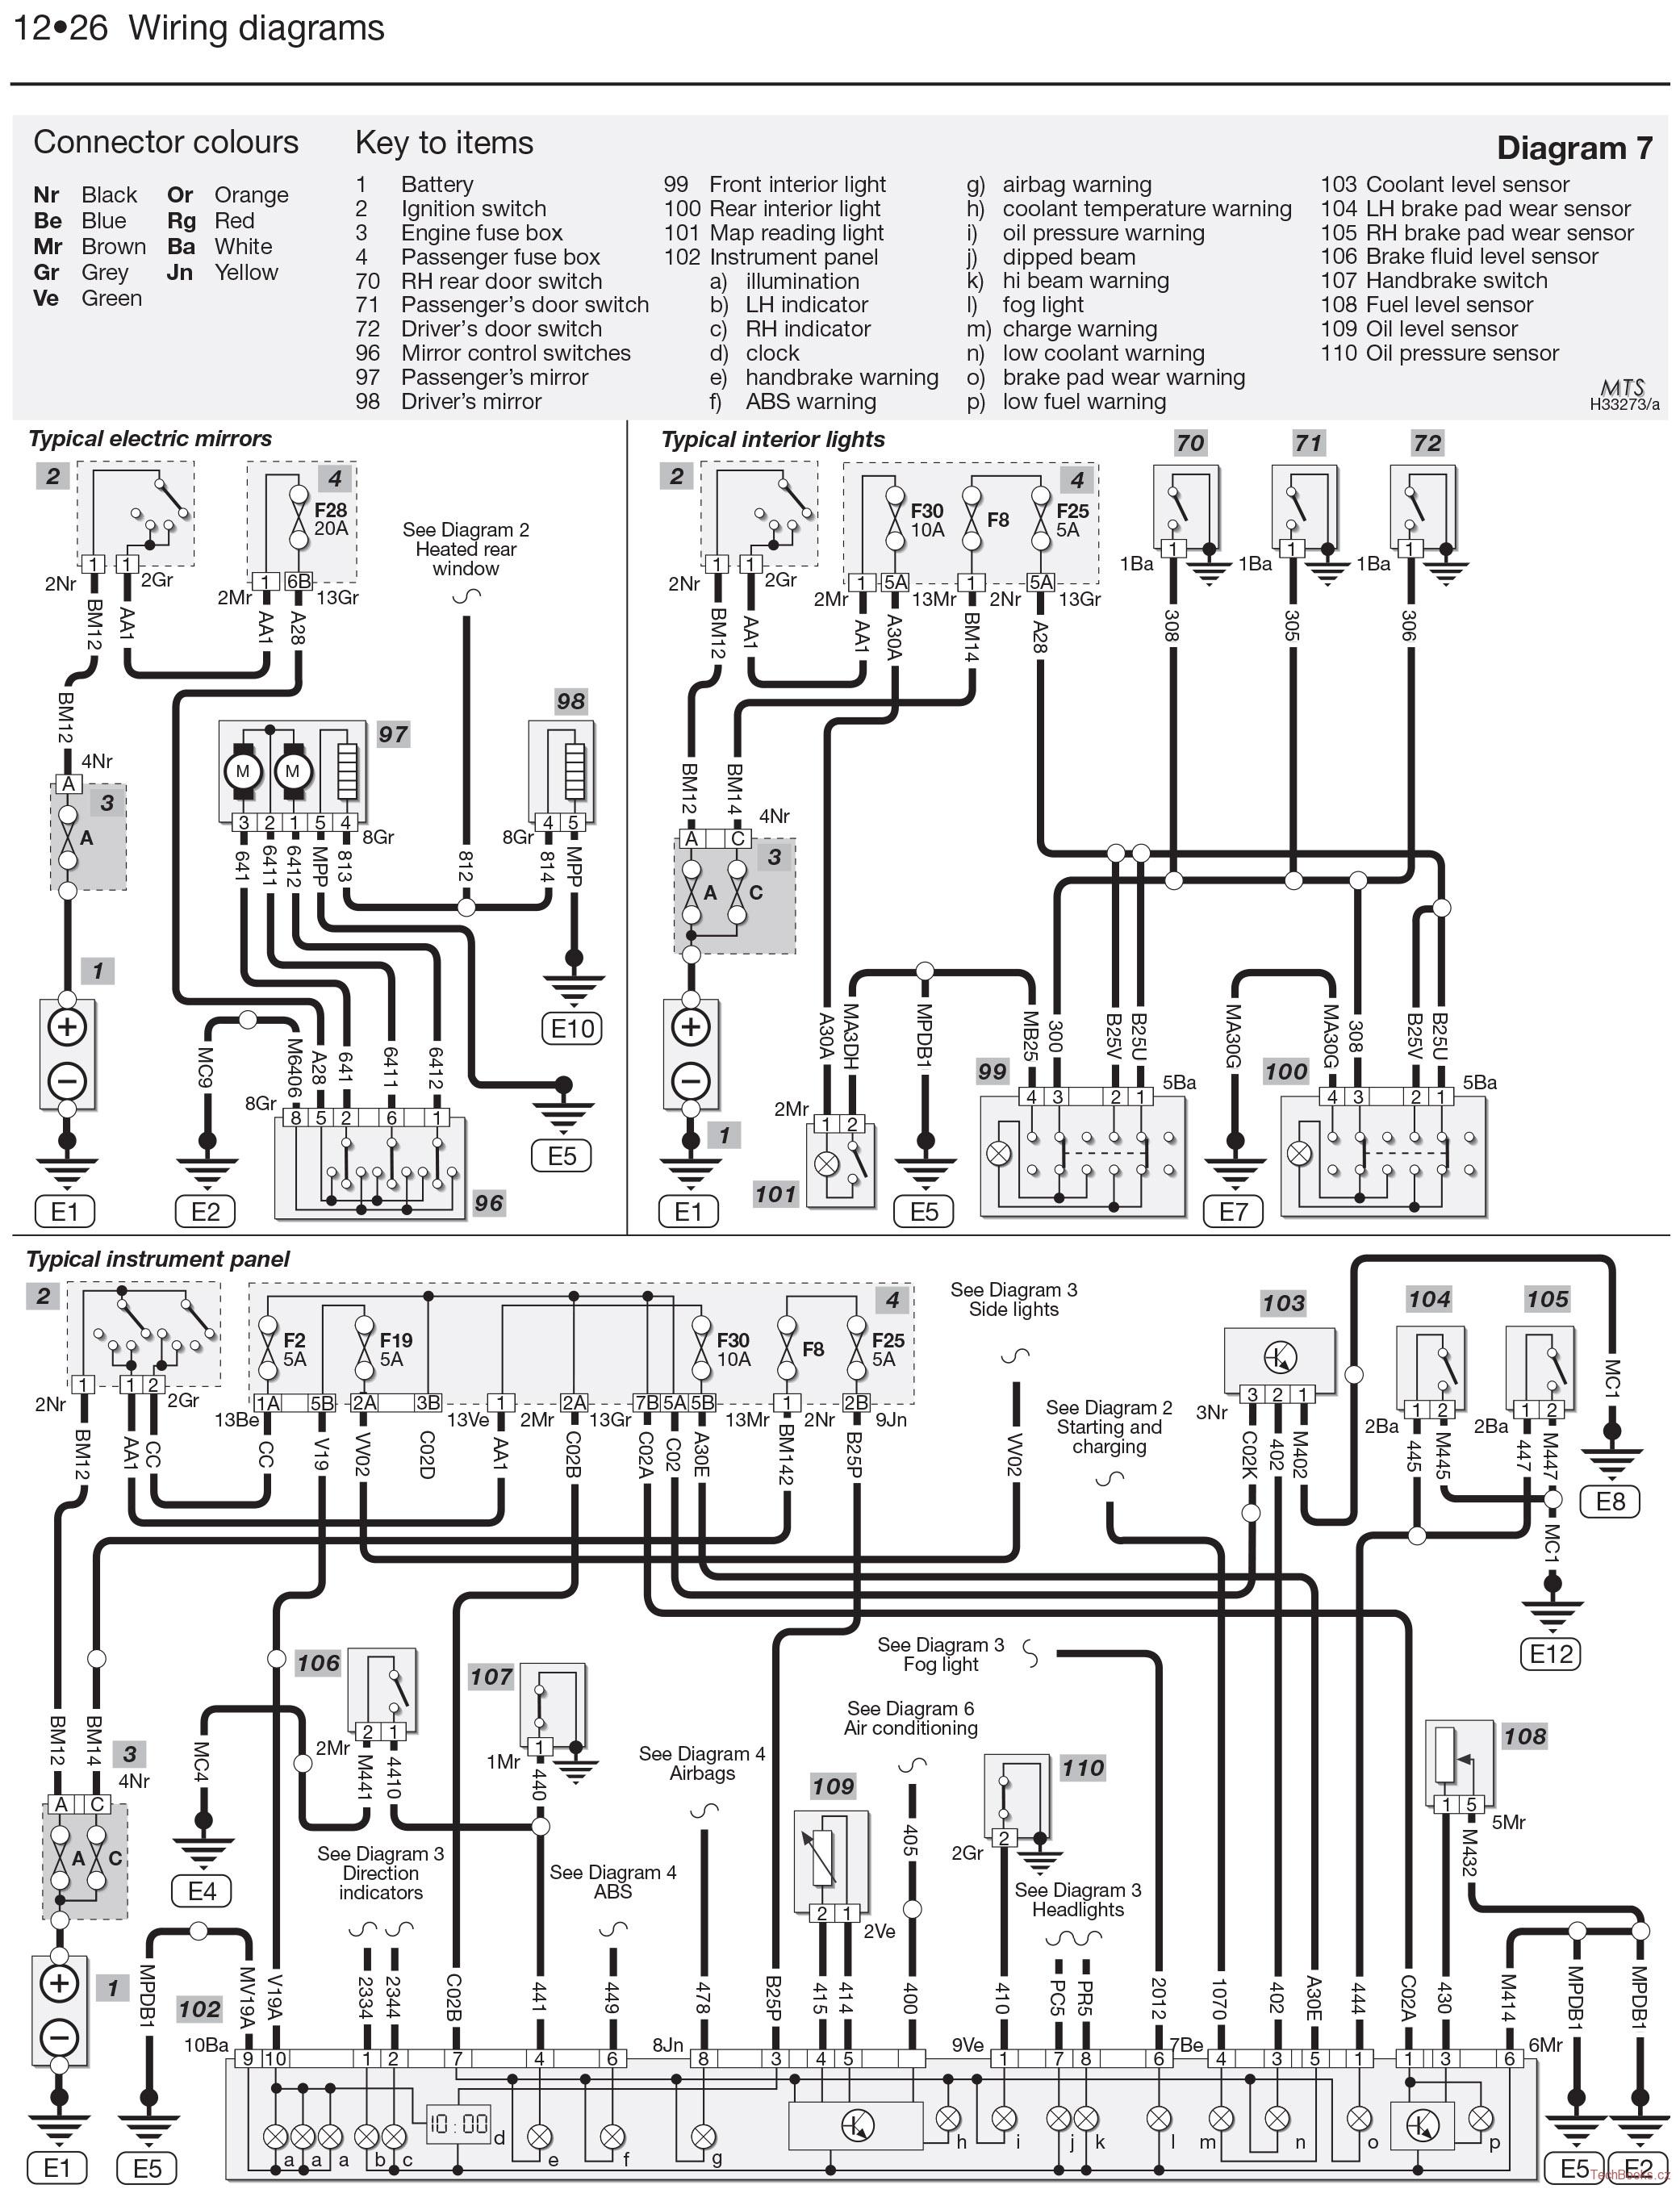 [DIAGRAM] Filter Queen 112b Wiring Diagram FULL Version HD Quality